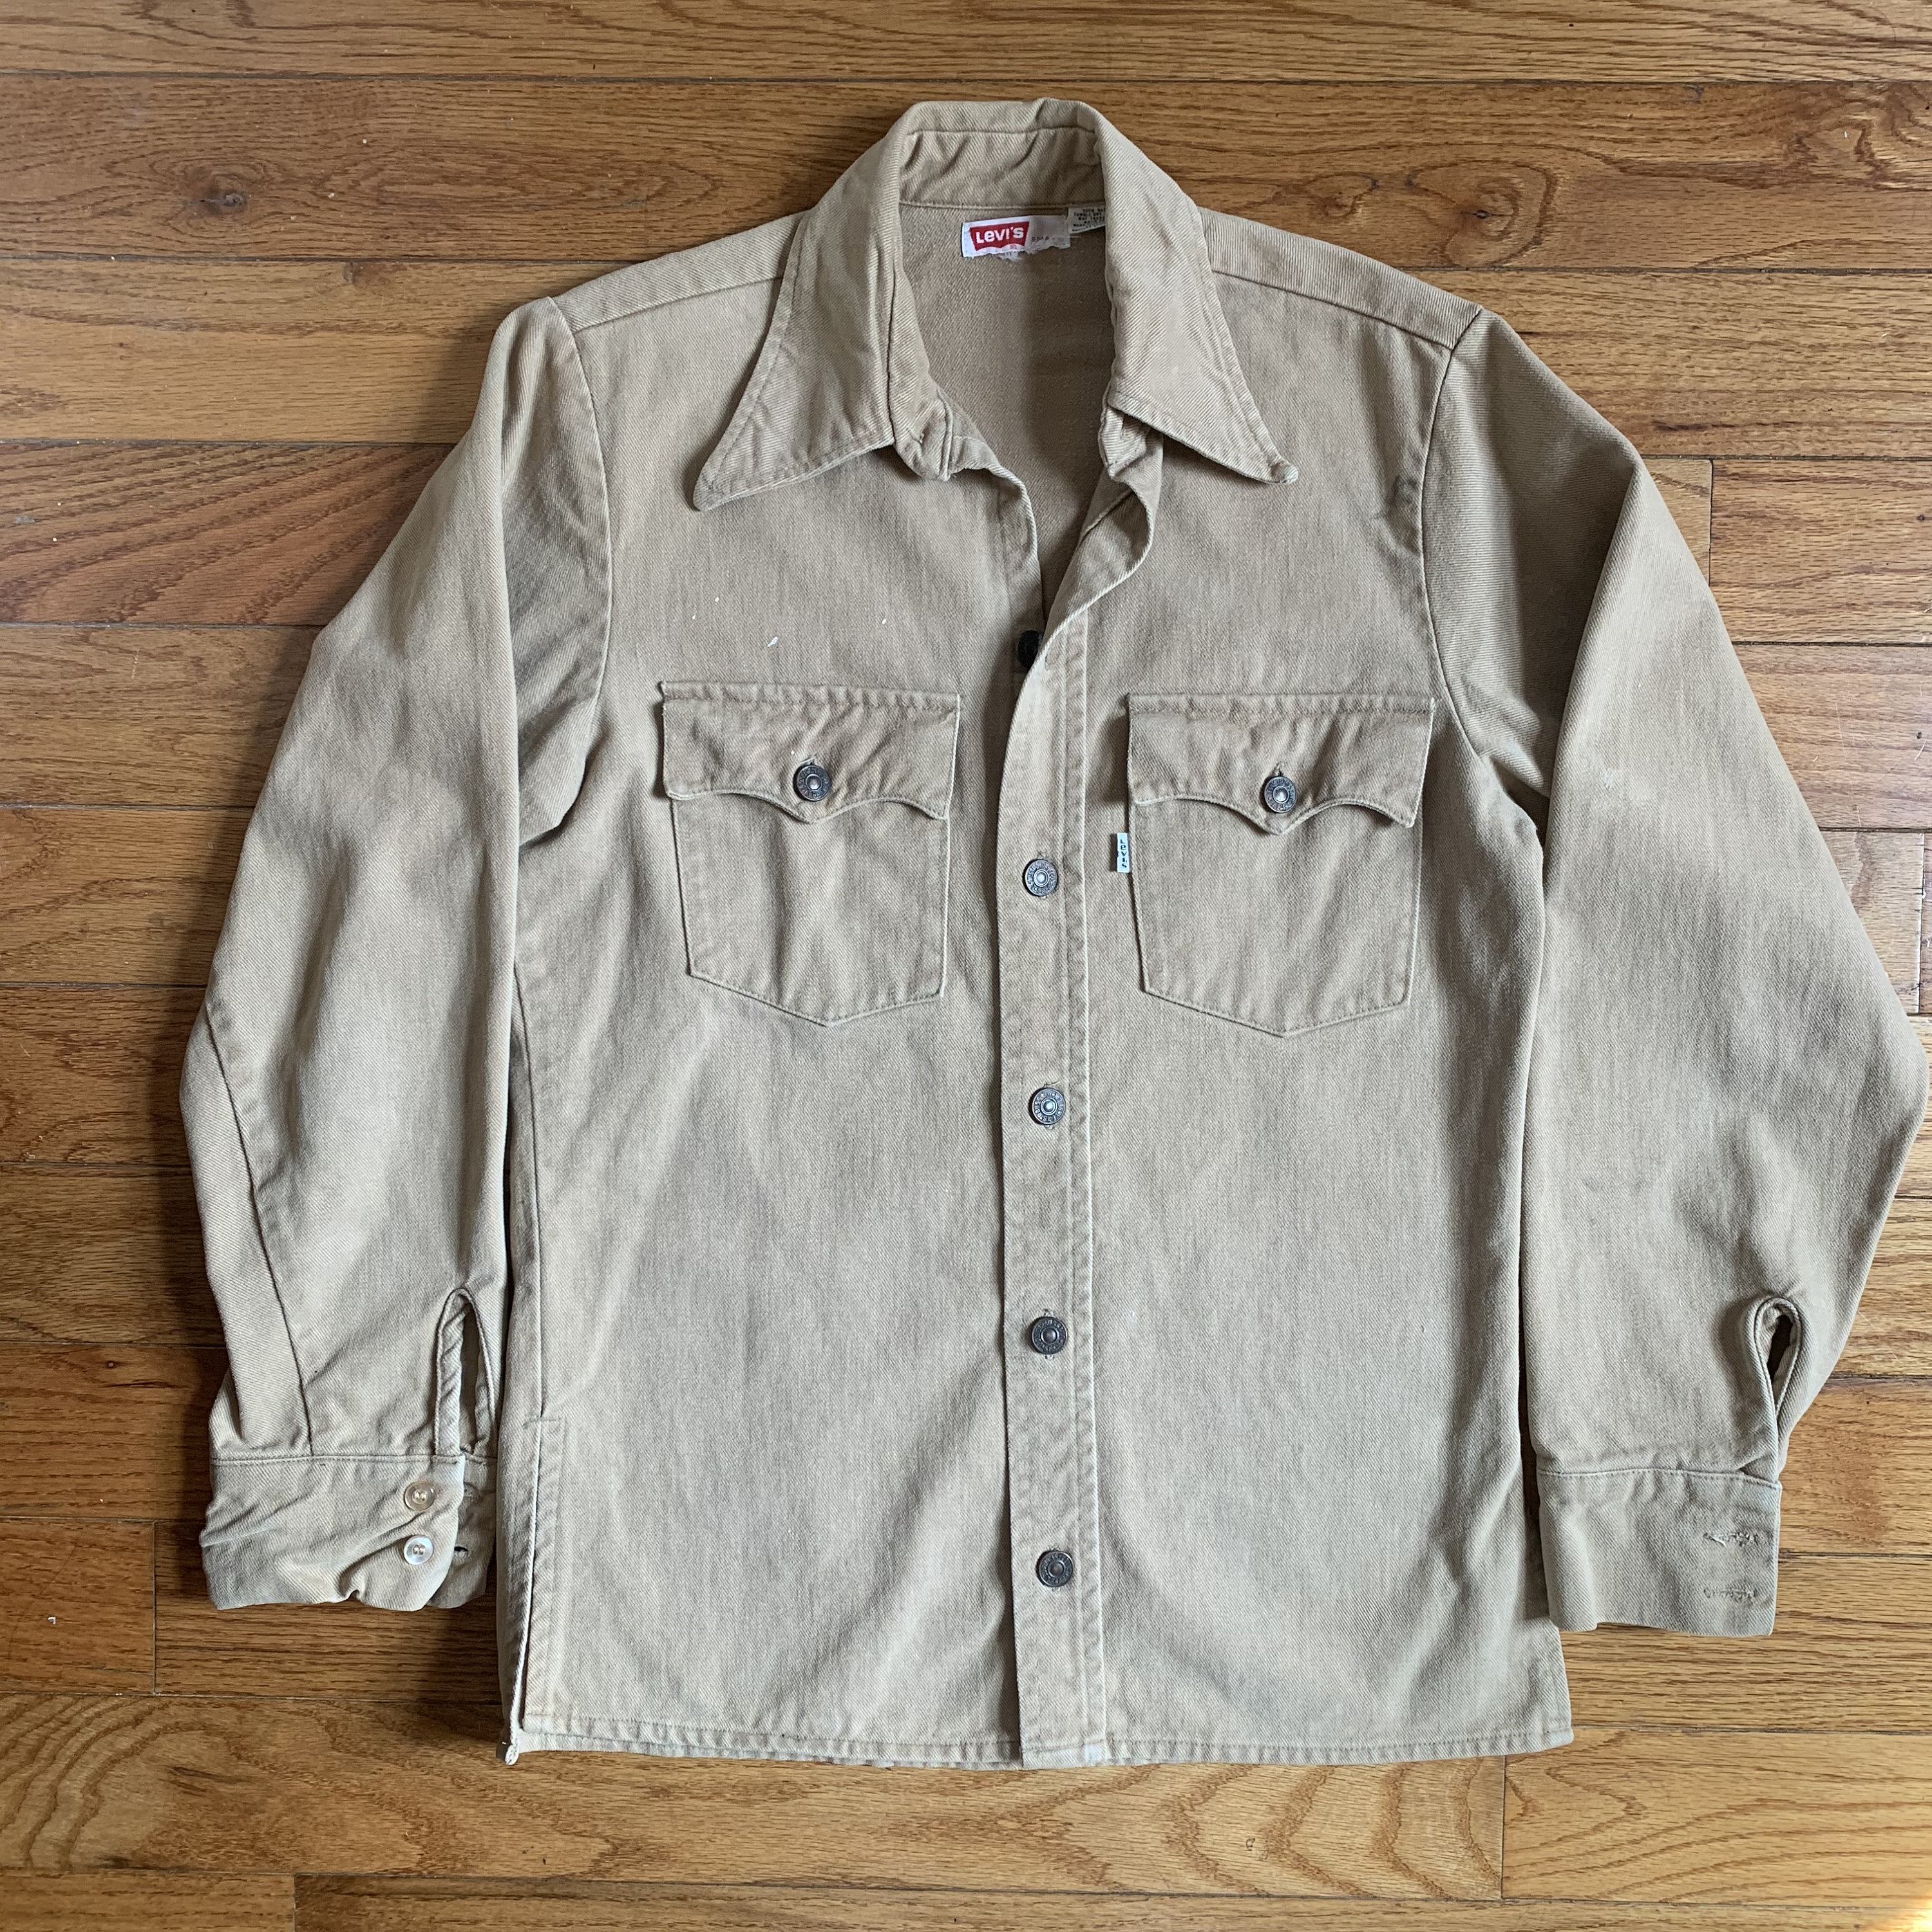 Original 1970s Levis Work Shirt Jacket - Etsy